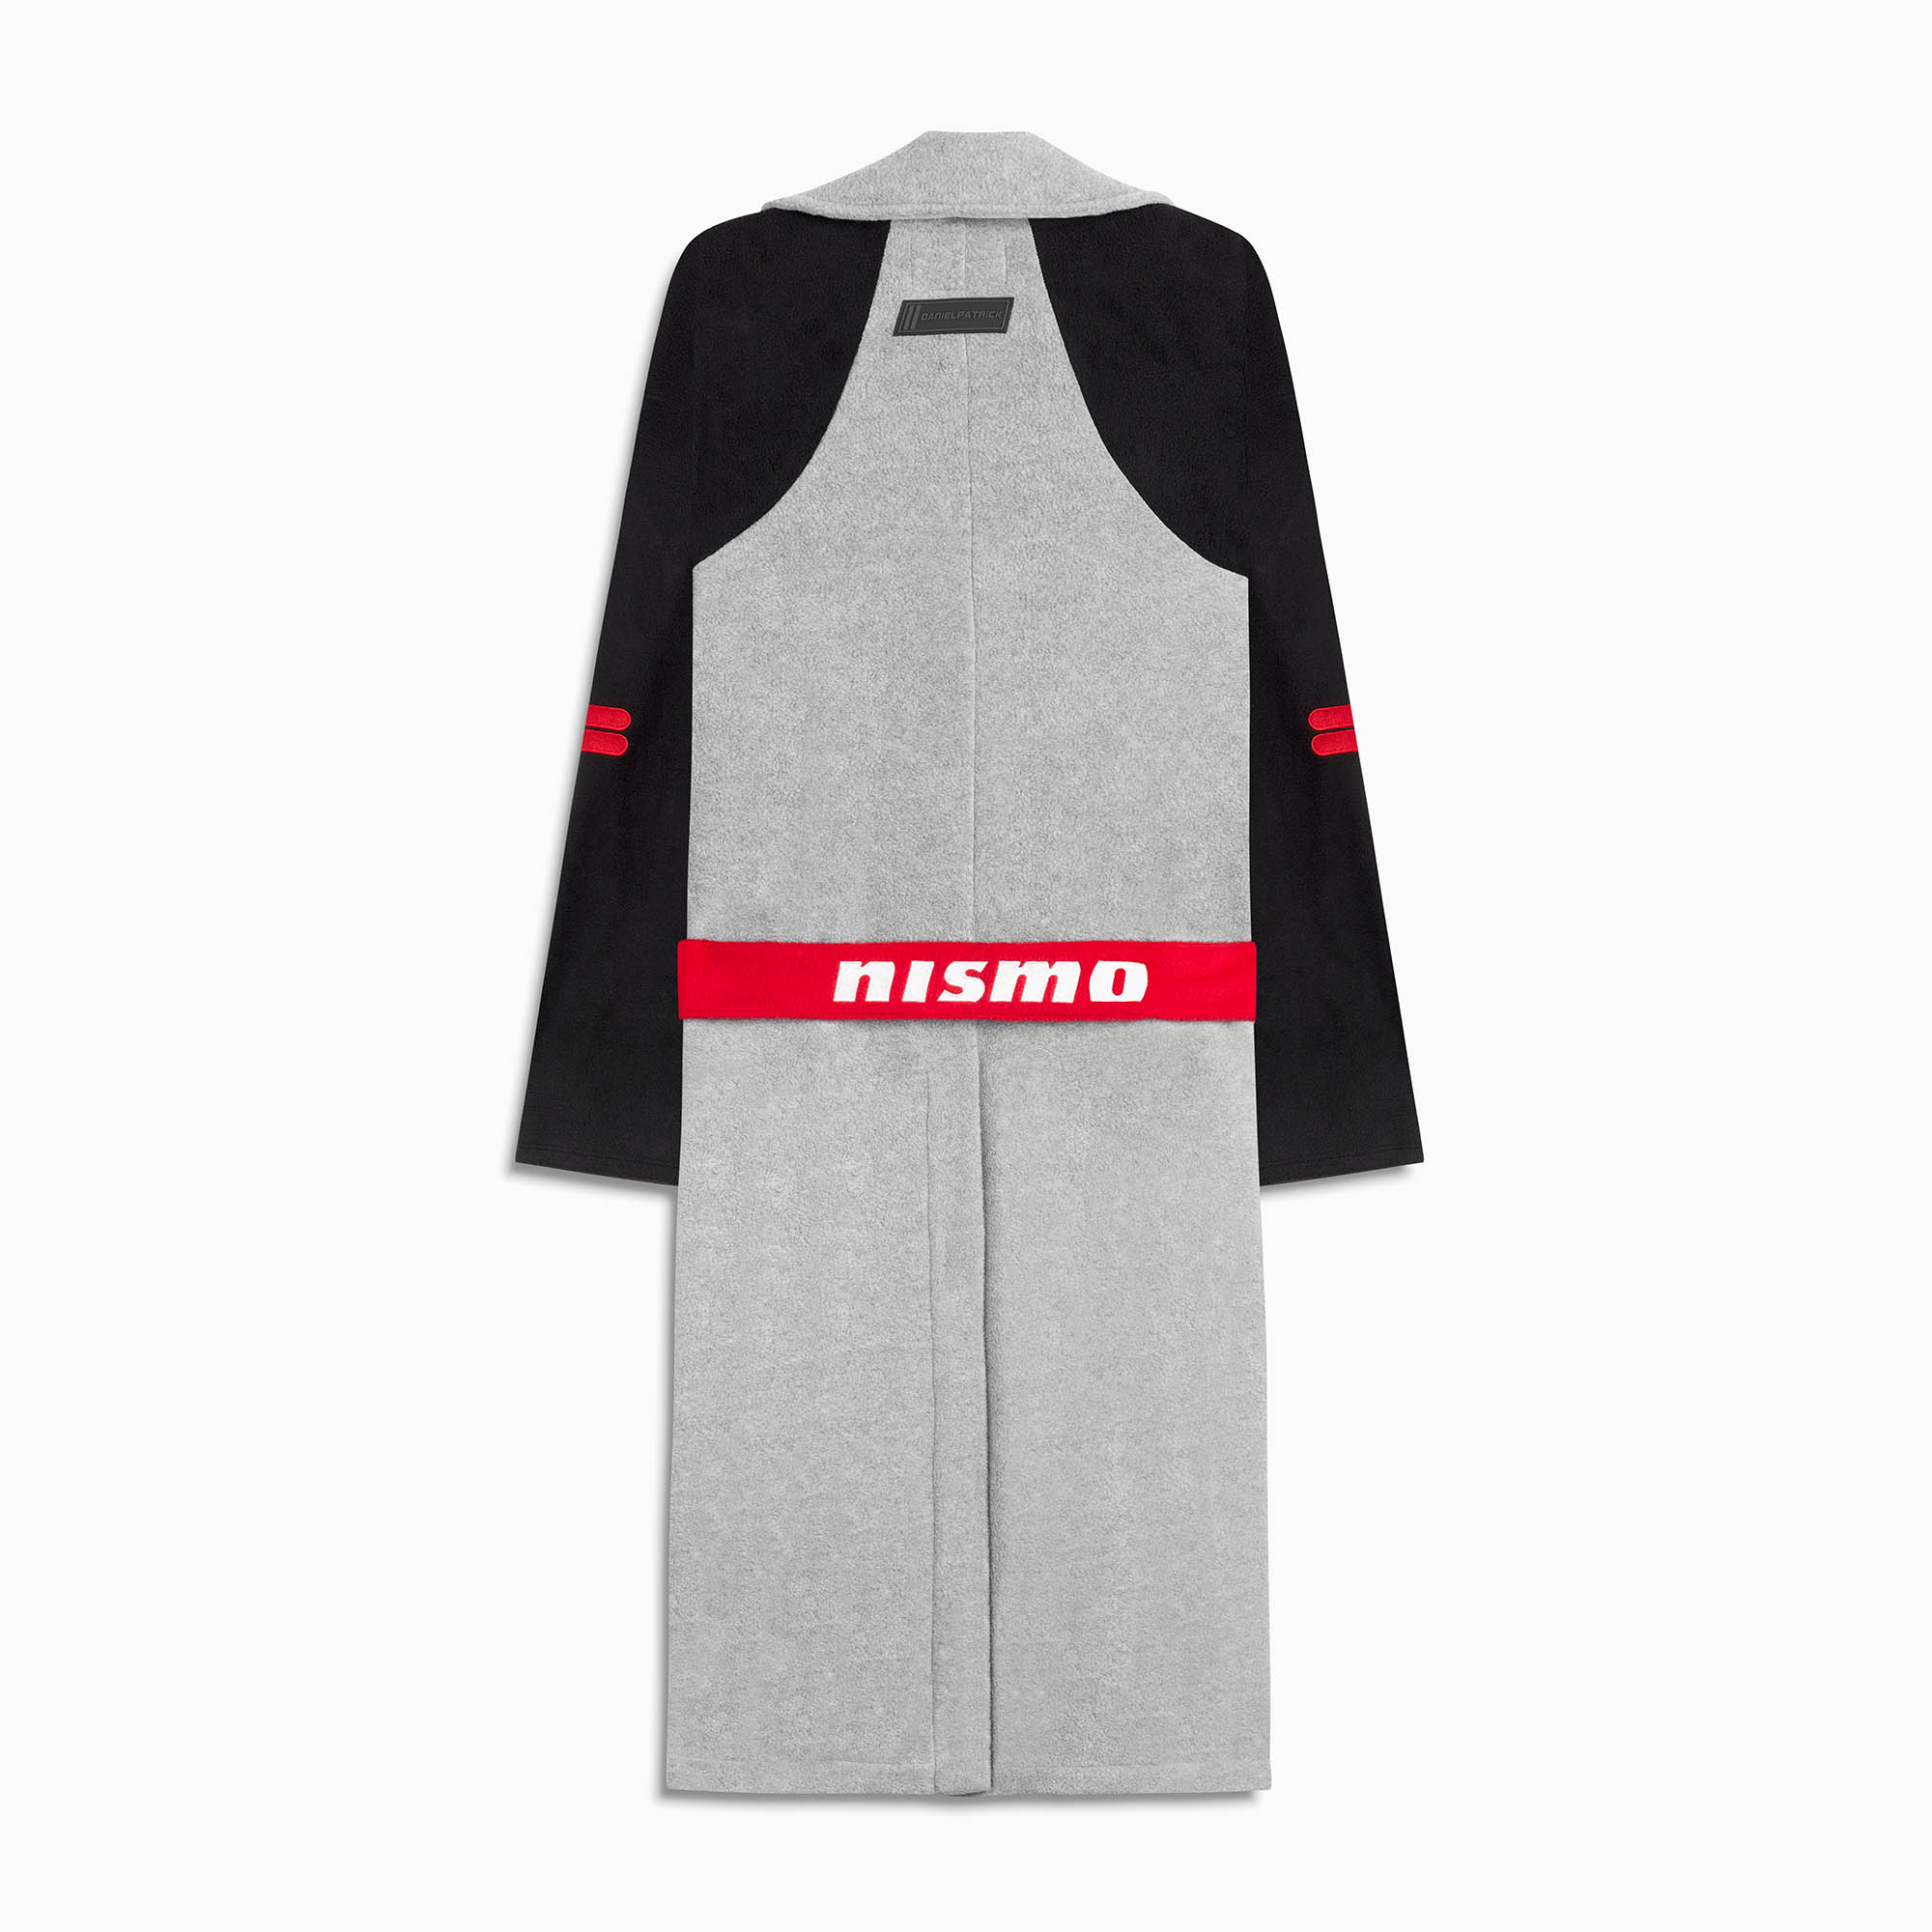 NISMO robe / grey + black + red